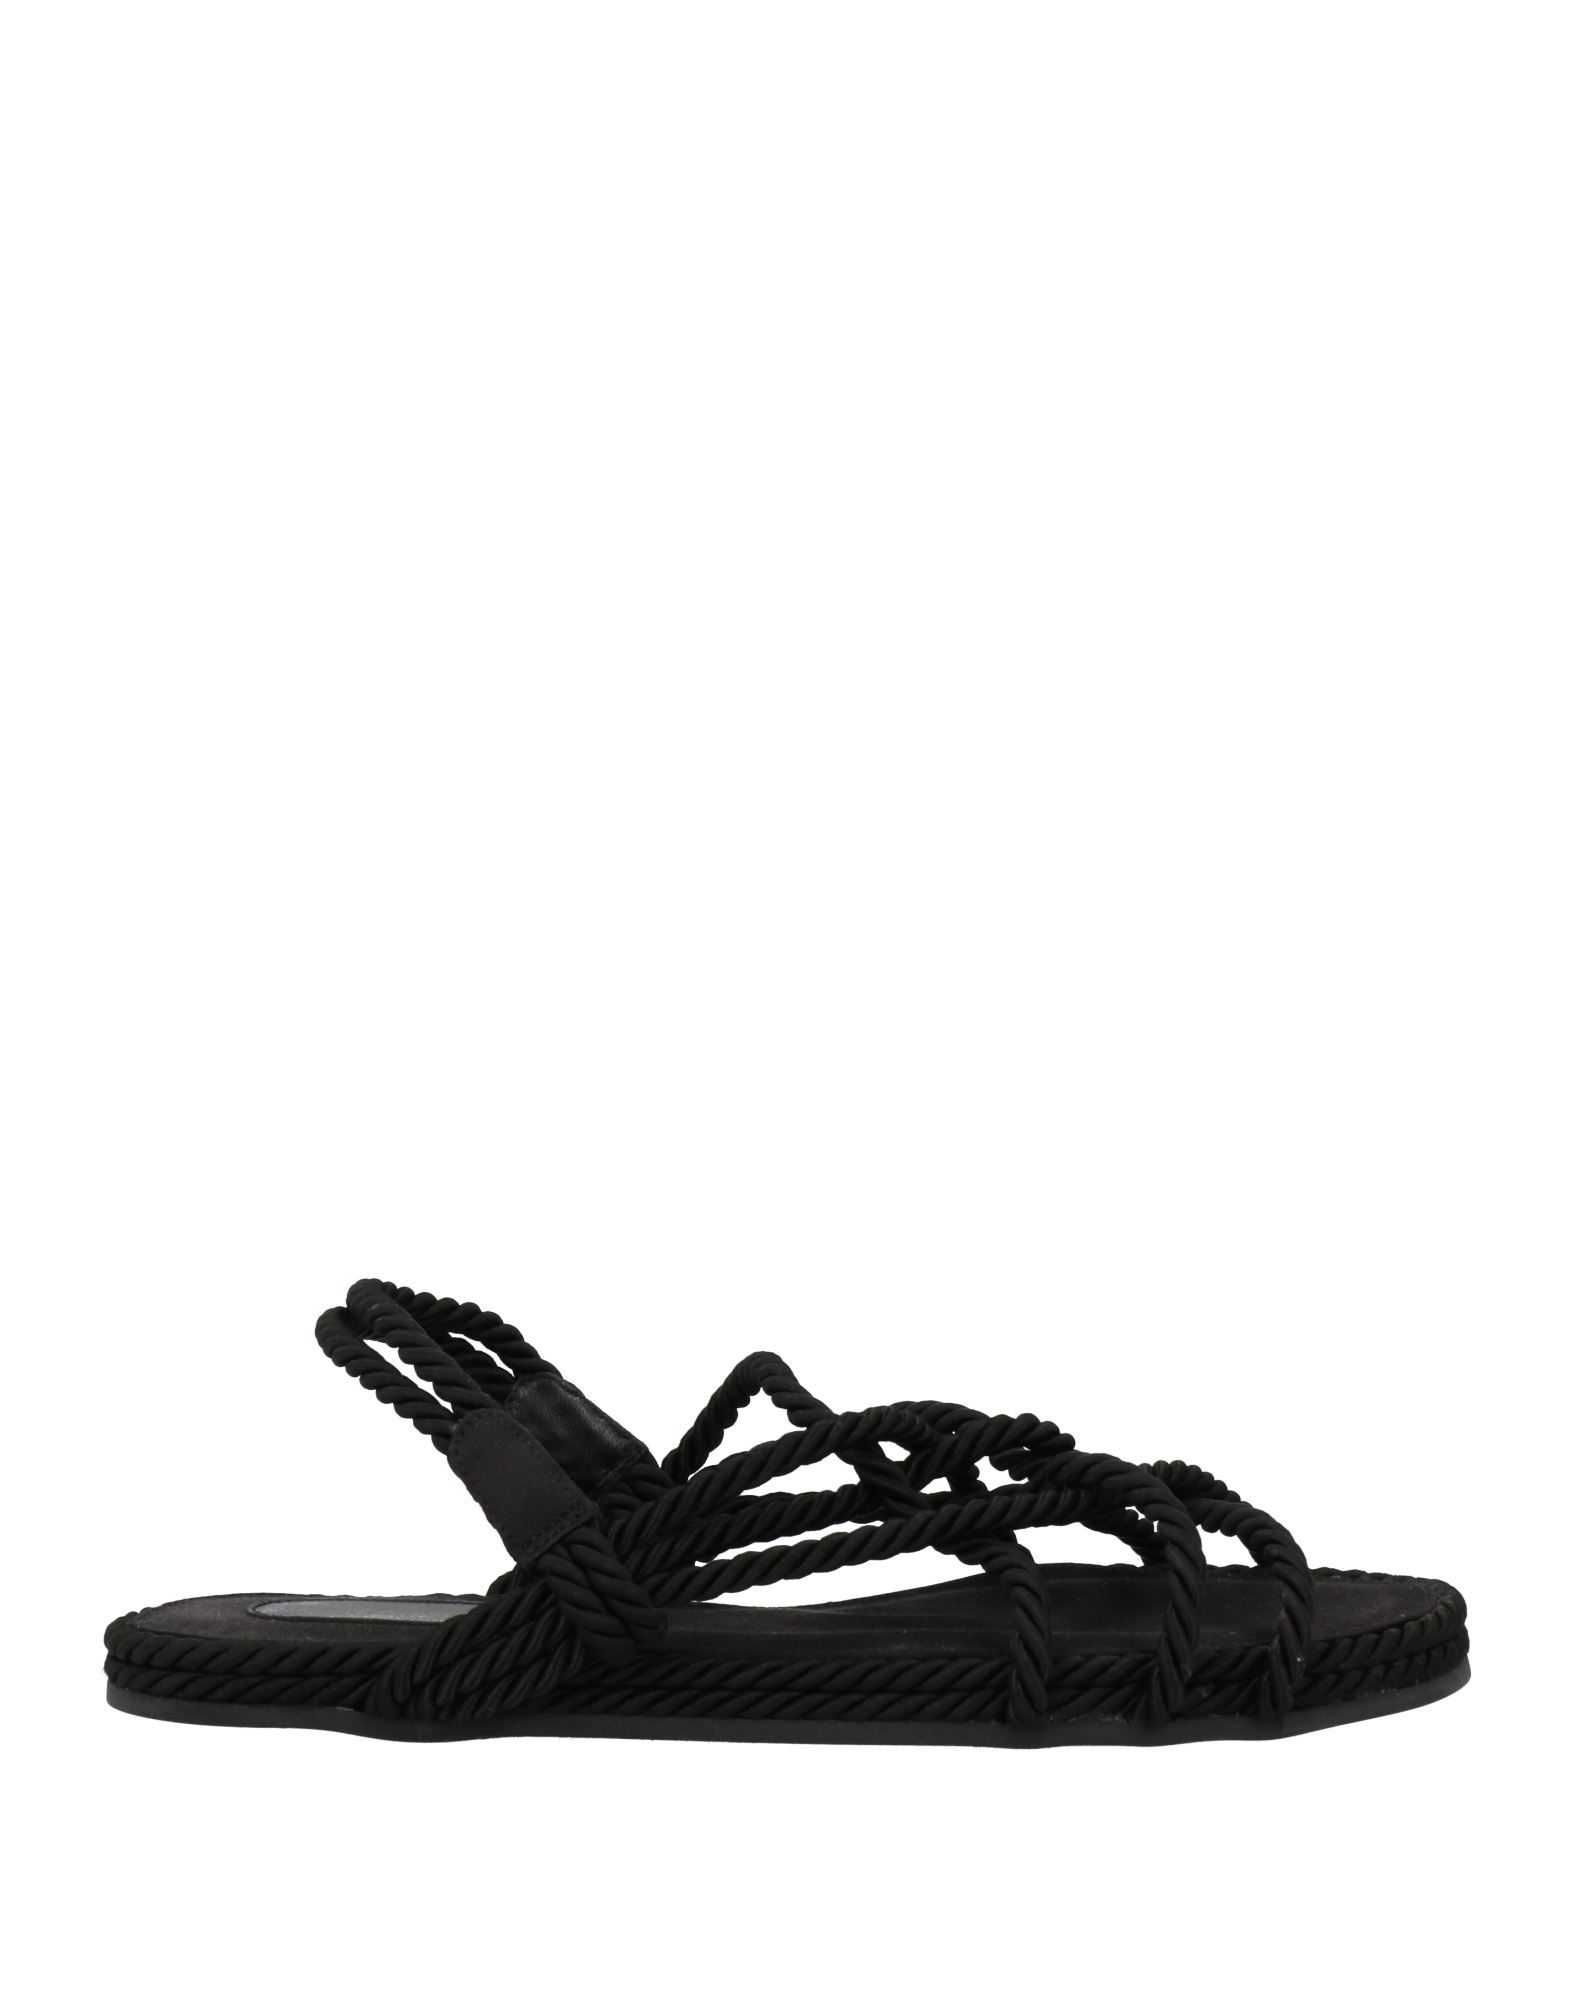 Giannico Sandals In Black